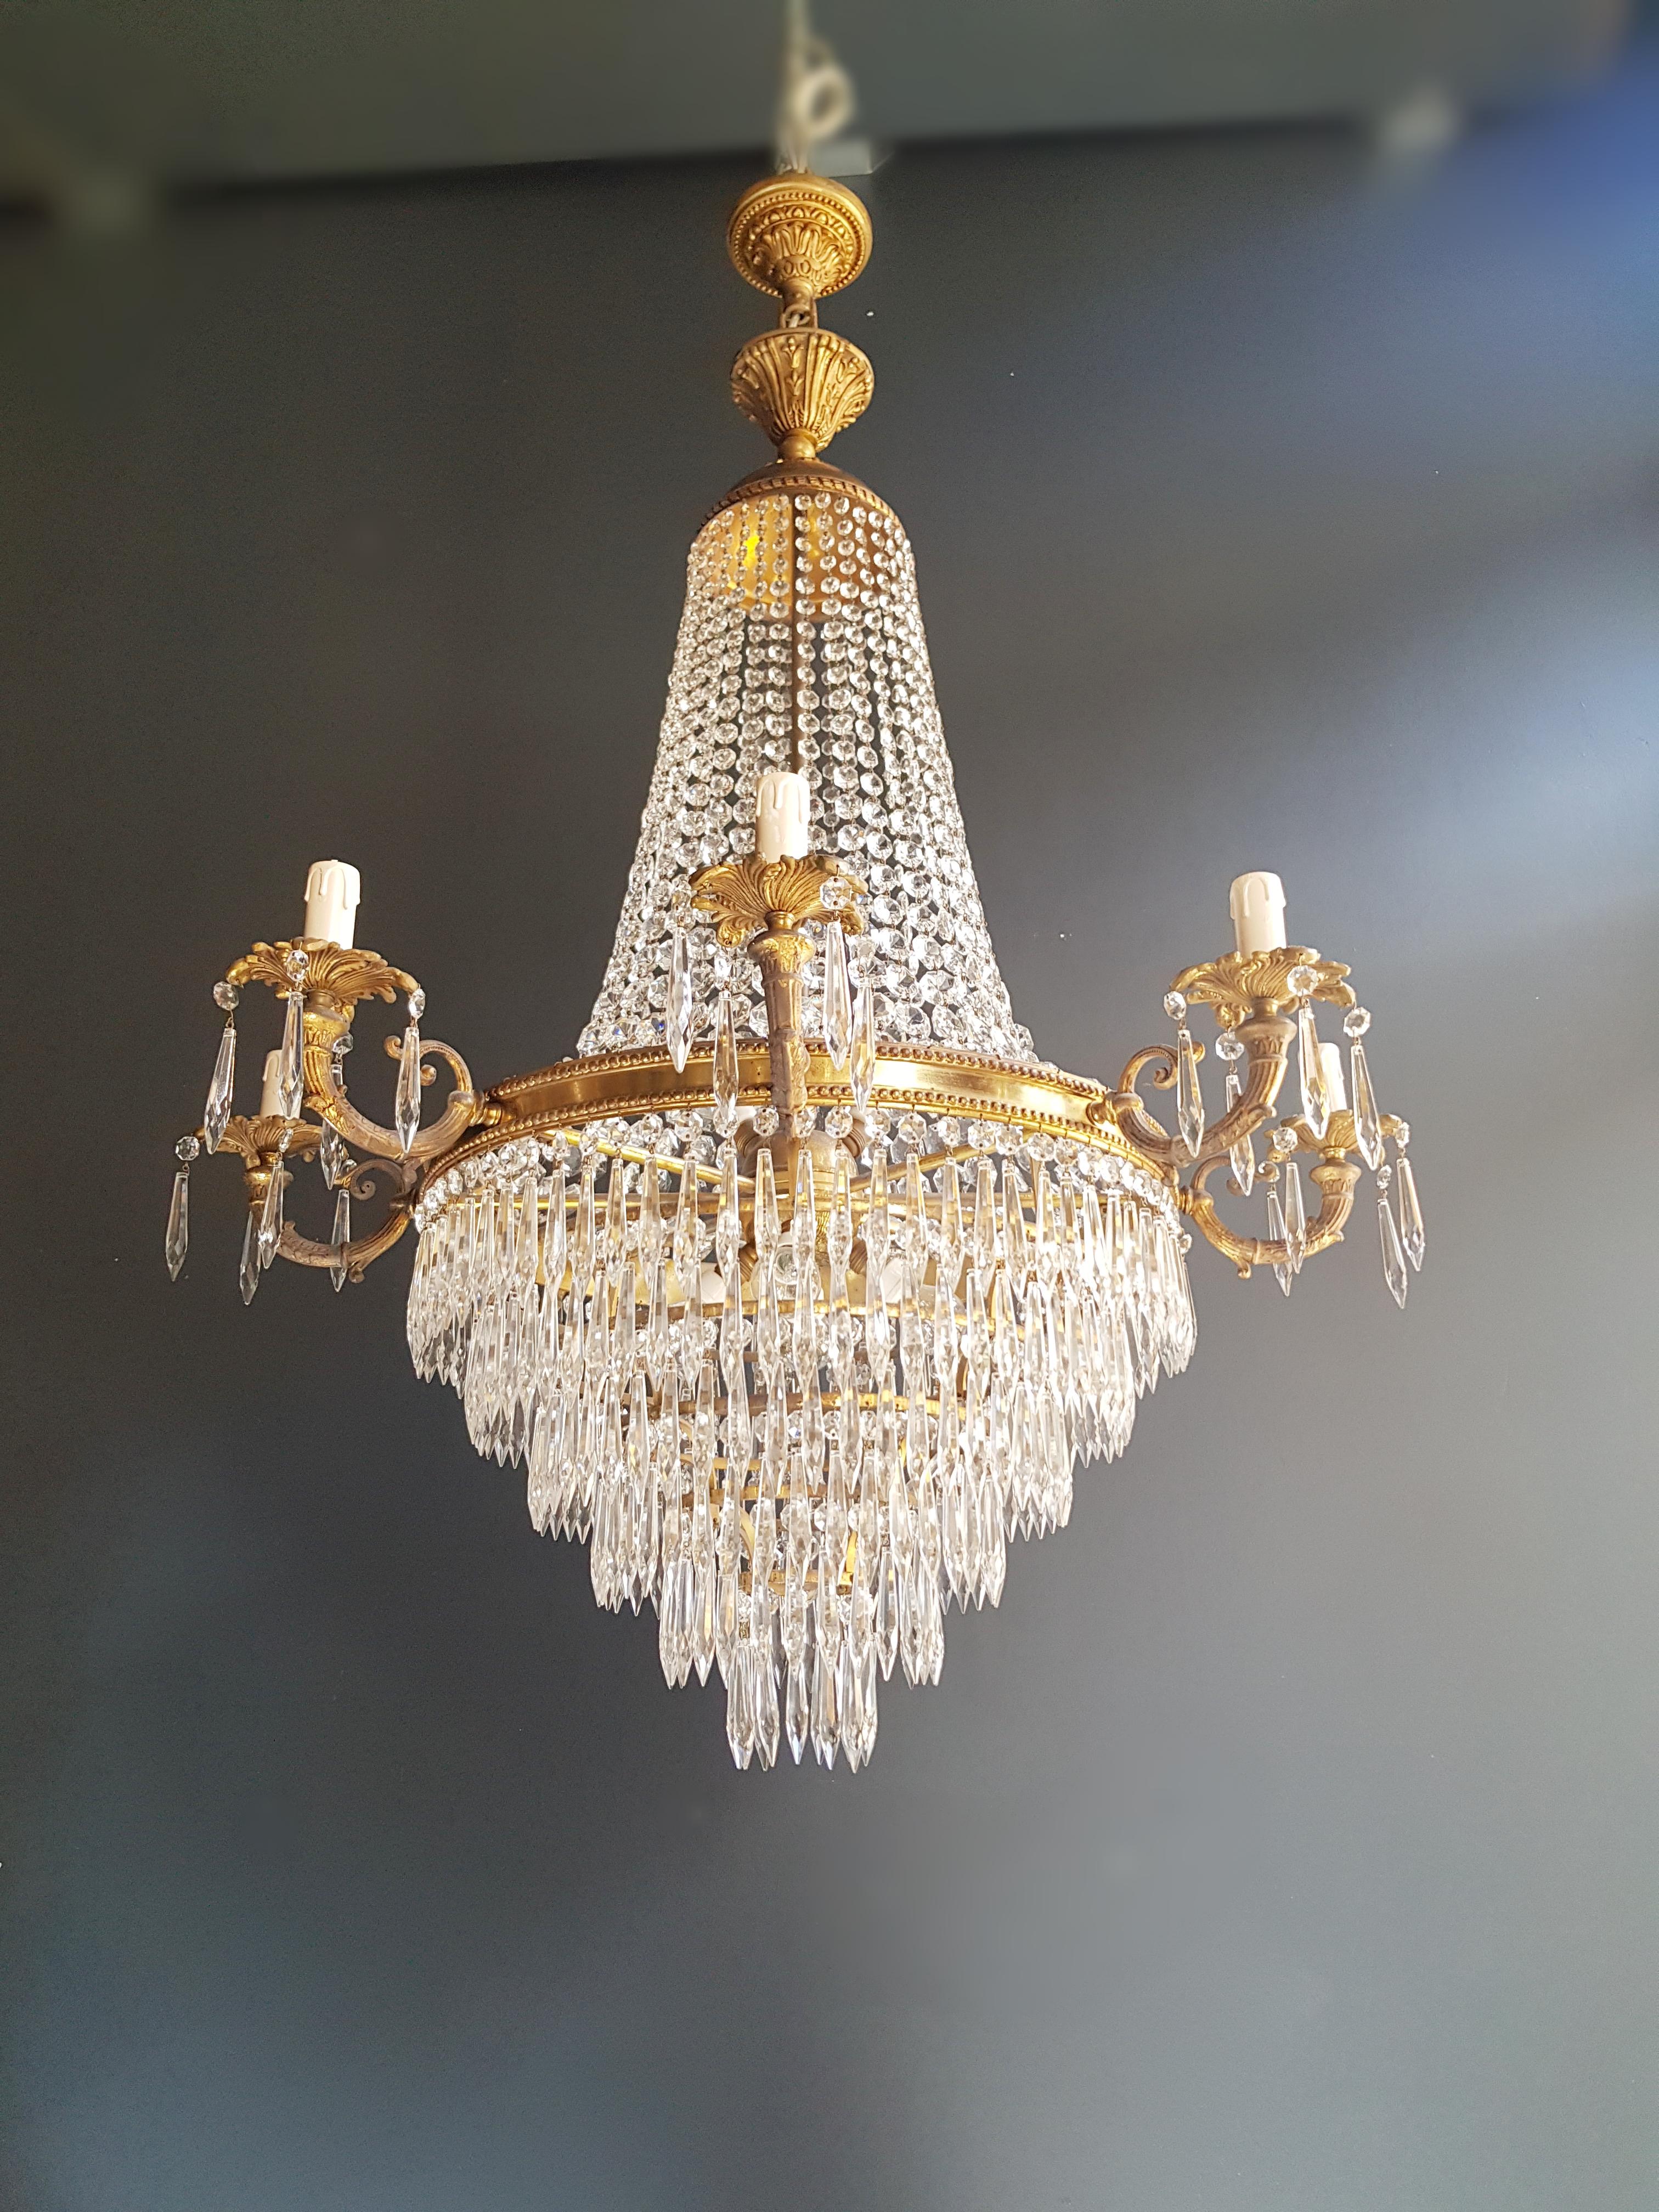 Montgolfiè Empire Sac a Pearl Chandelier Crystal Lustre Ceiling Lamp Antique 4